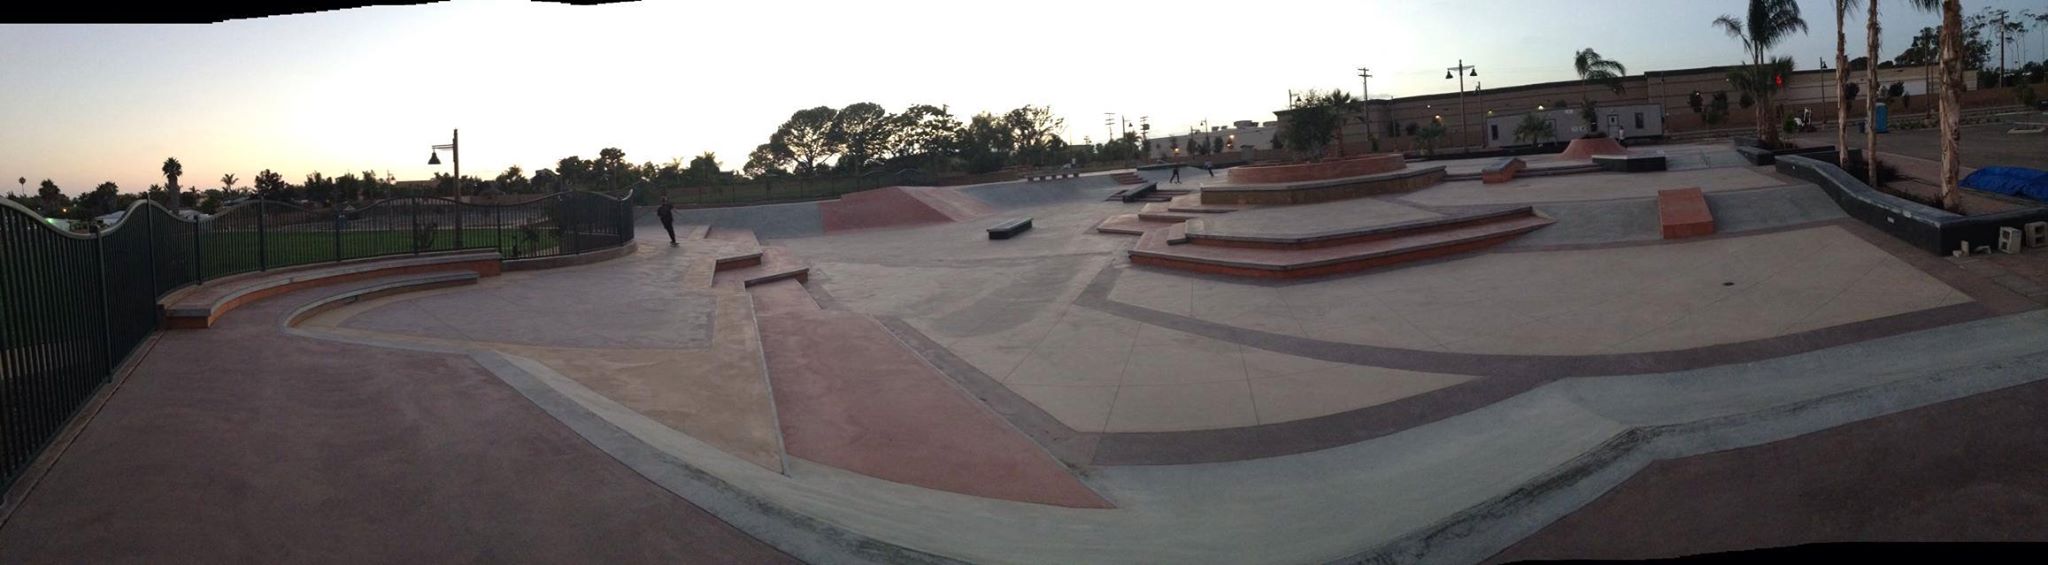 Encinitas Skatepark